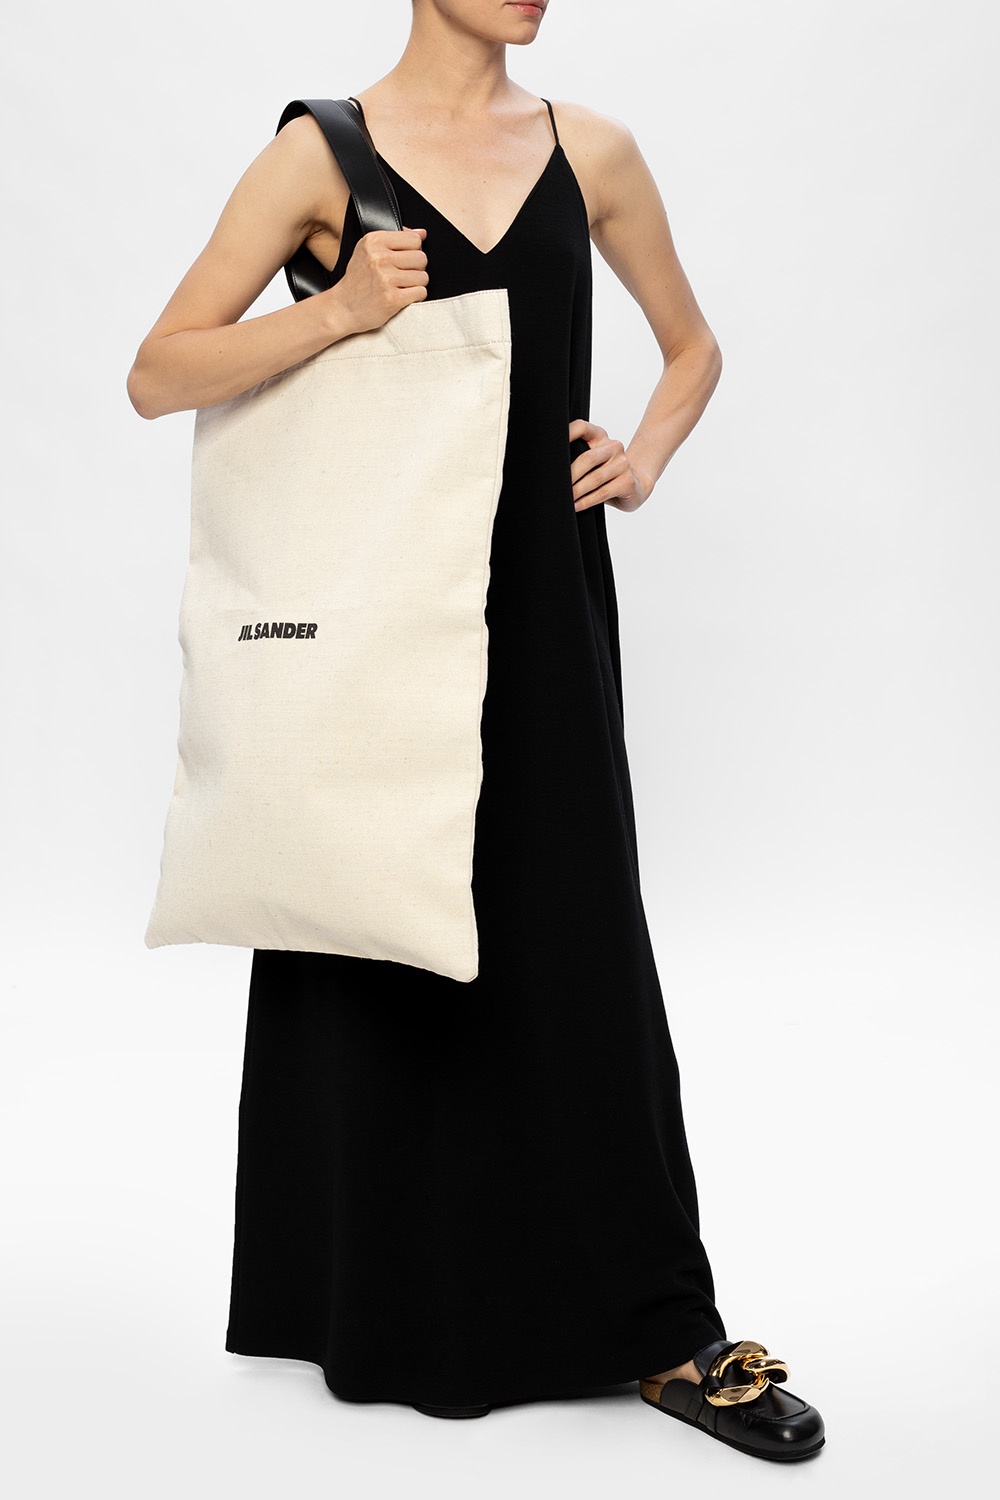 Louis Vuitton Apron Button Dress - Vitkac shop online